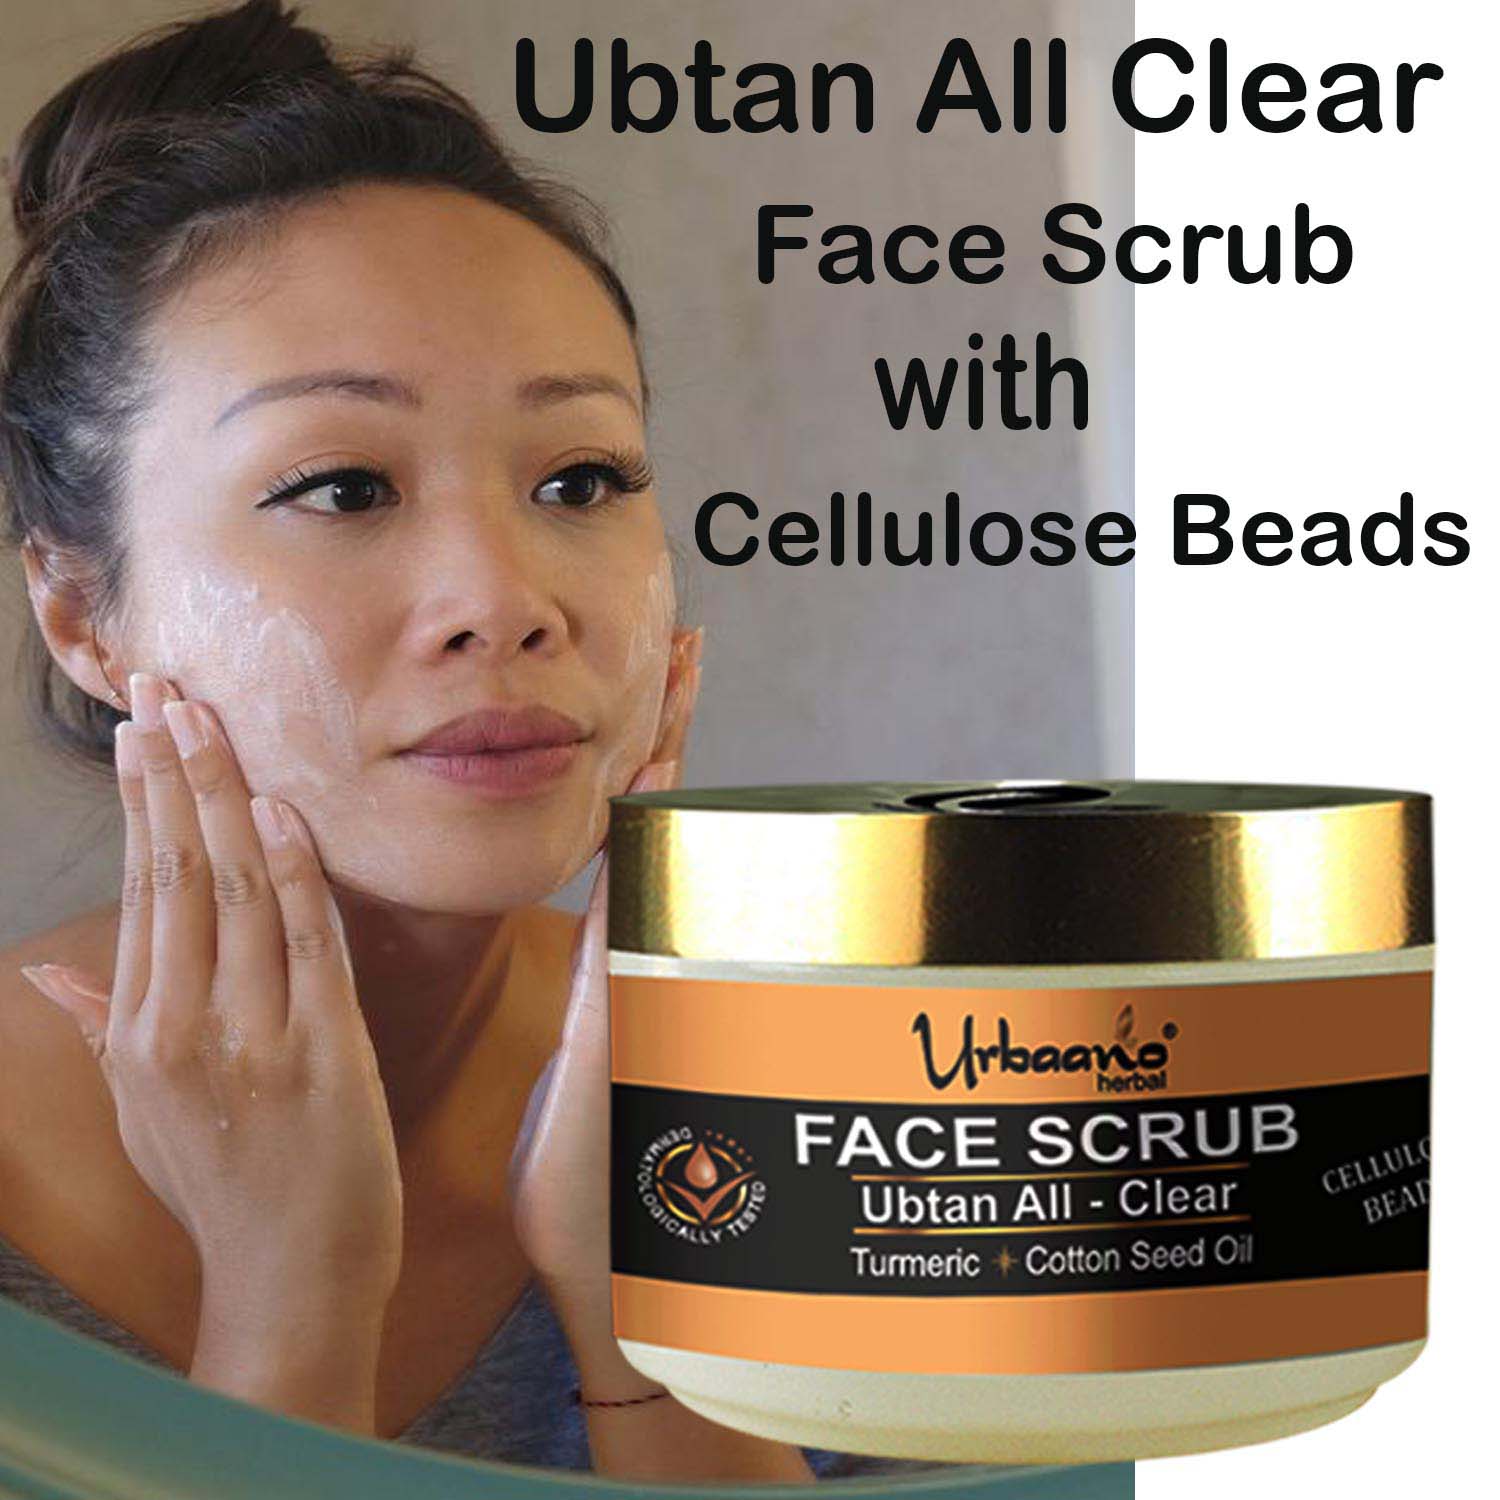 urbaano herbal vitamn c de tan facial kit ubtan all clear face scrub with cellulose beads, turmeric & cotton seed oil